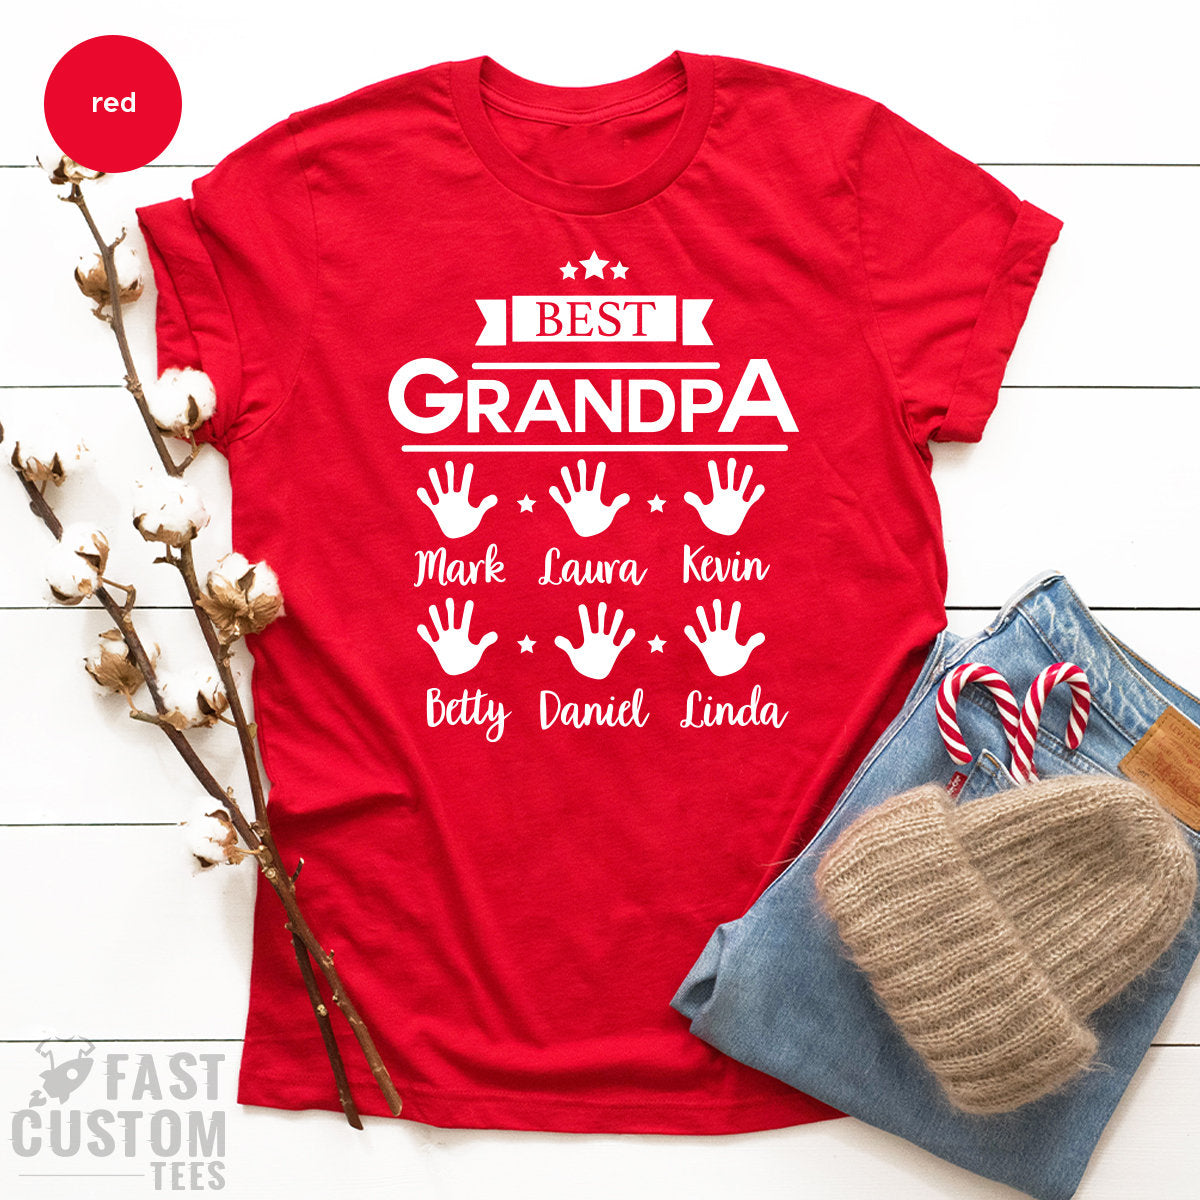 Best Grandpa Shirt, Custom Name T Shirt, Personalized T-Shirt, Fathers Day Shirt, Grandfather Gifts, Men Graphic Tees, Cool Custom Hoodie